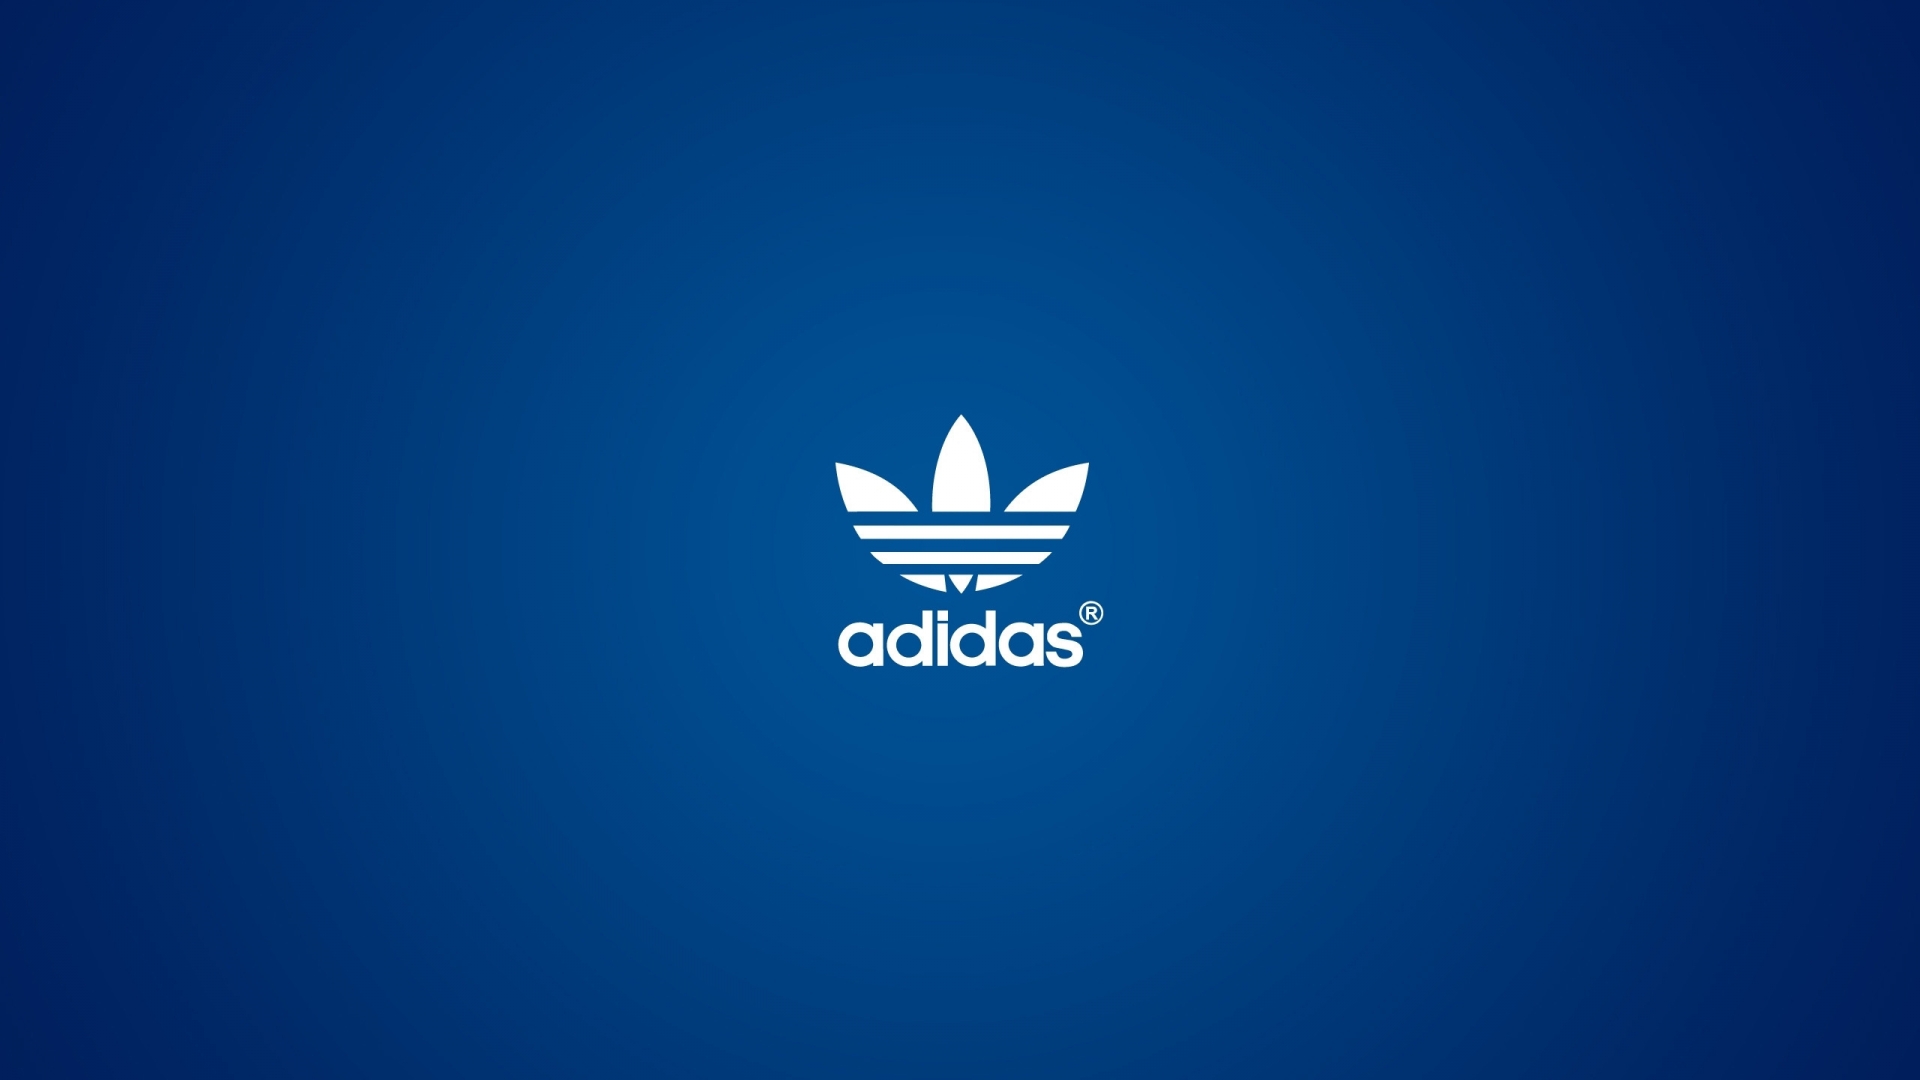 Adidas Logo for 1920 x 1080 HDTV 1080p resolution